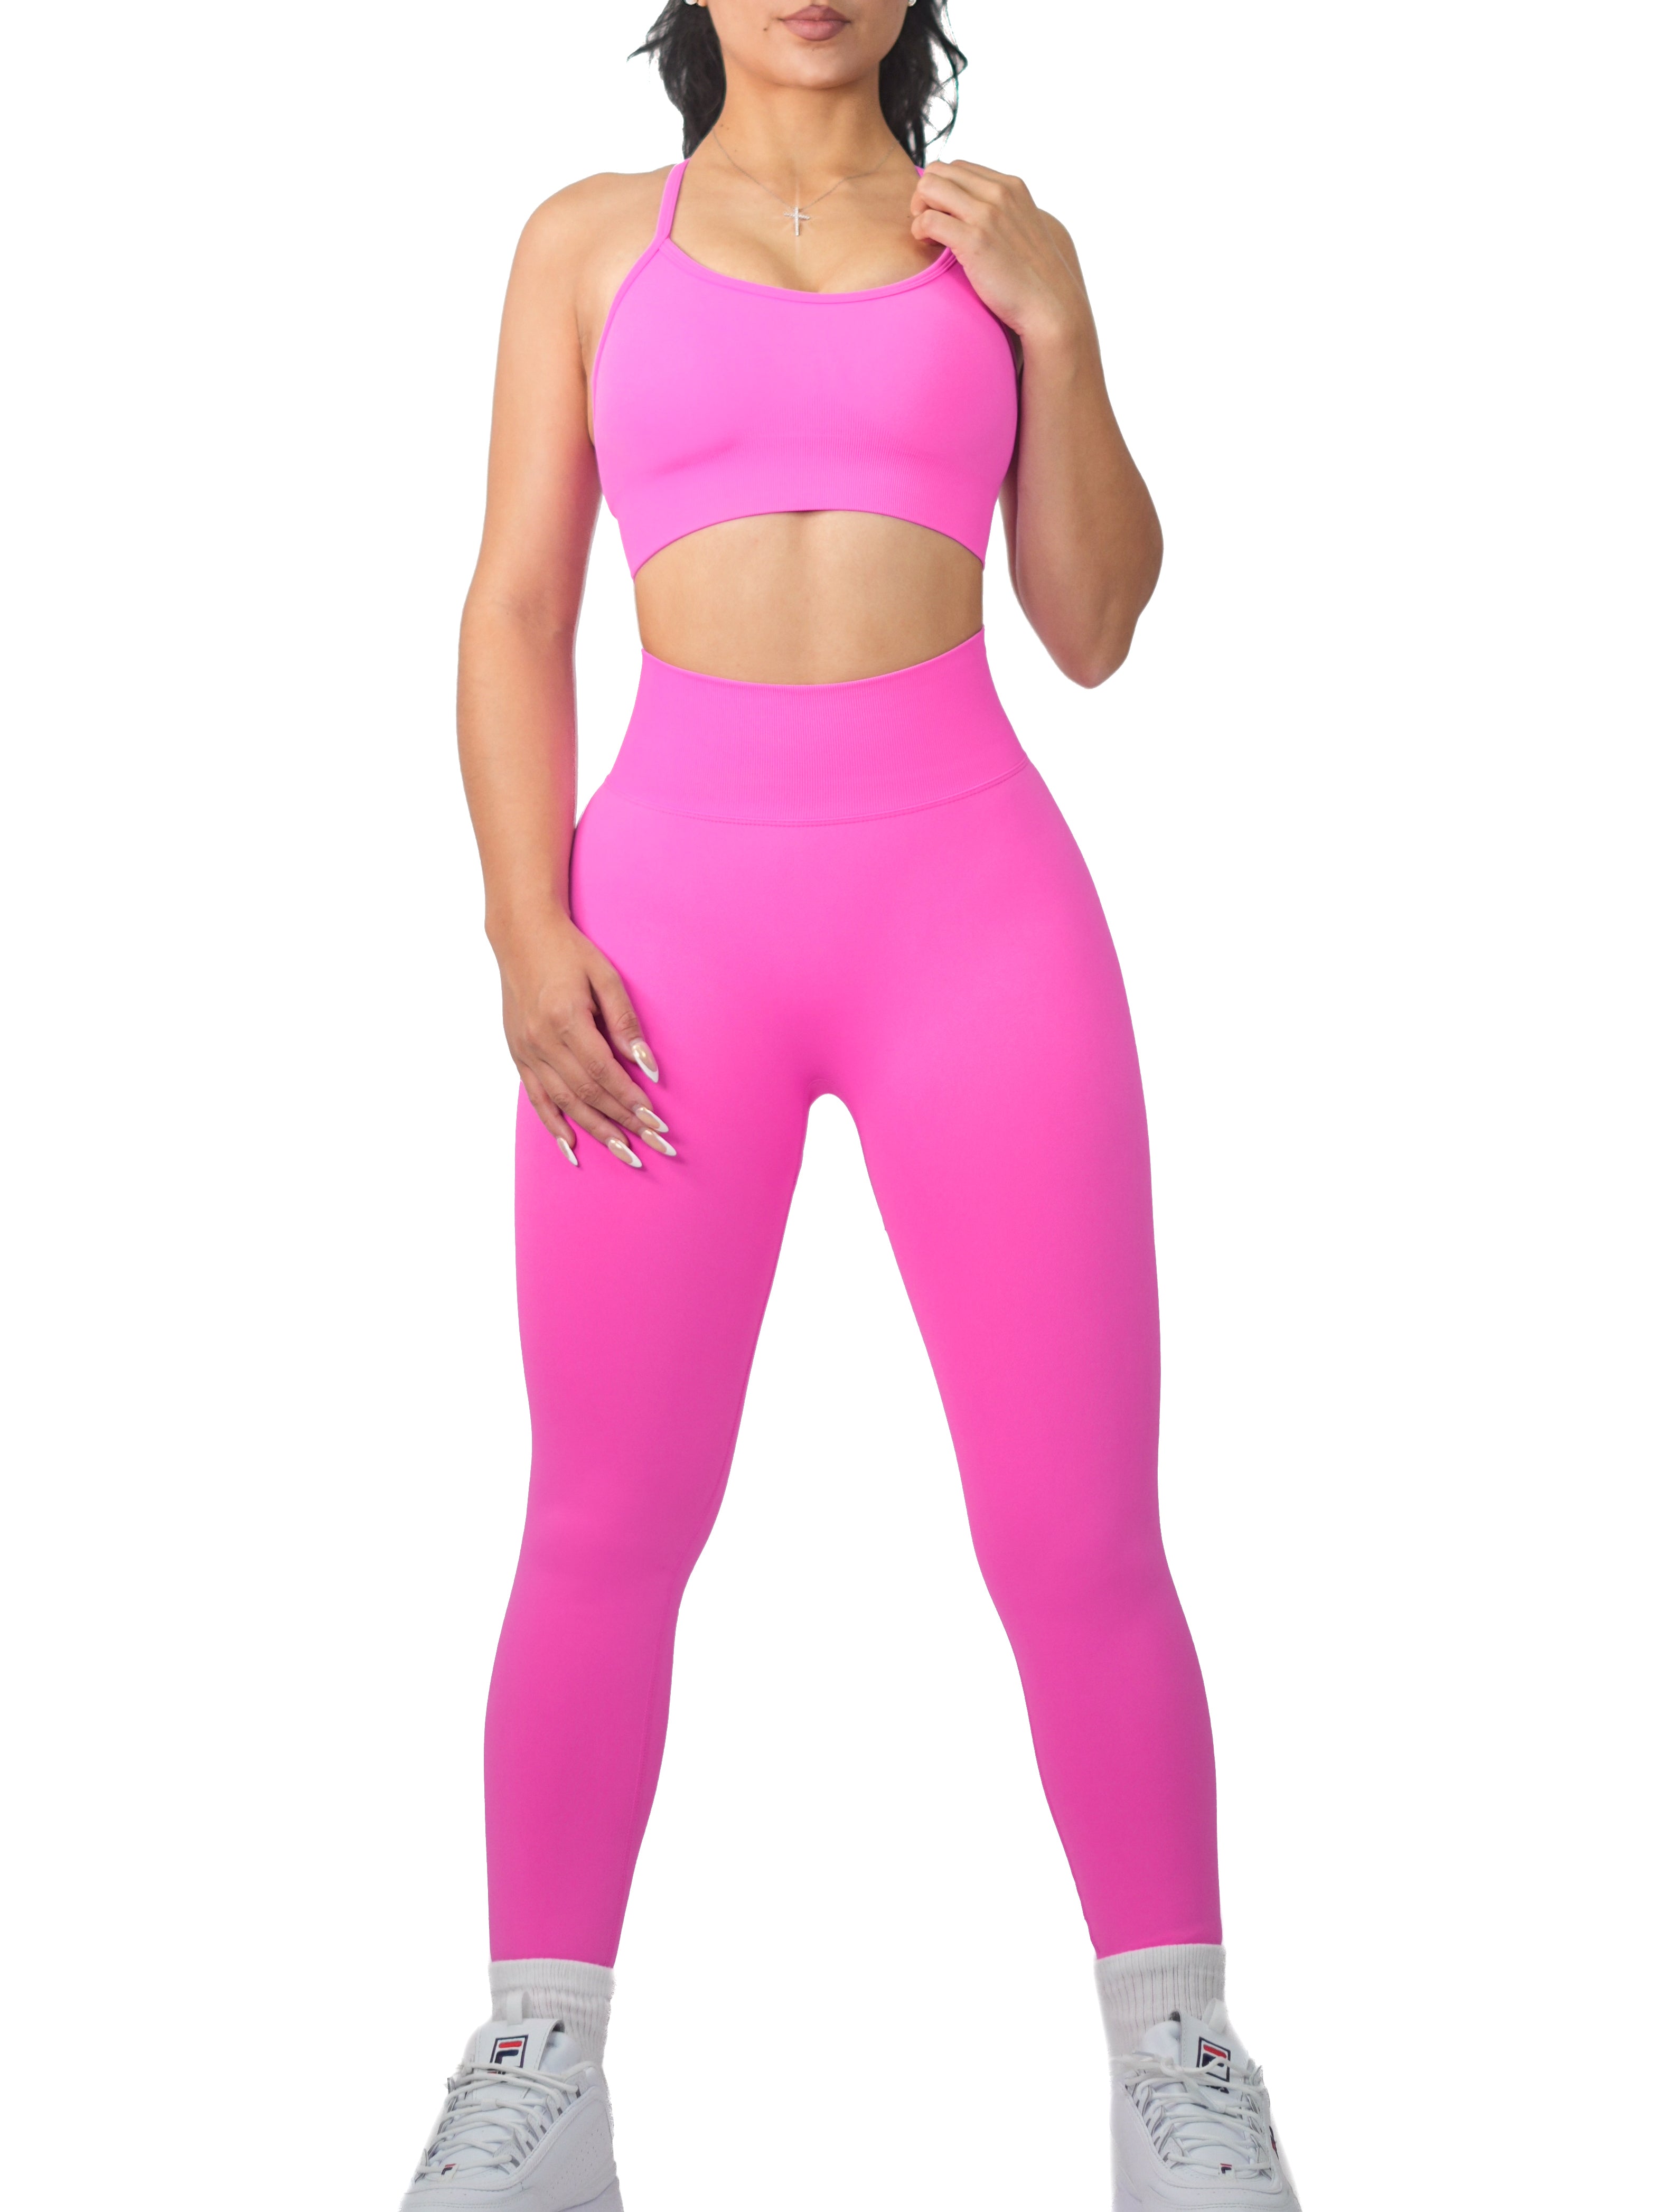 Athletic Seamless Leggings (Hot Pink)